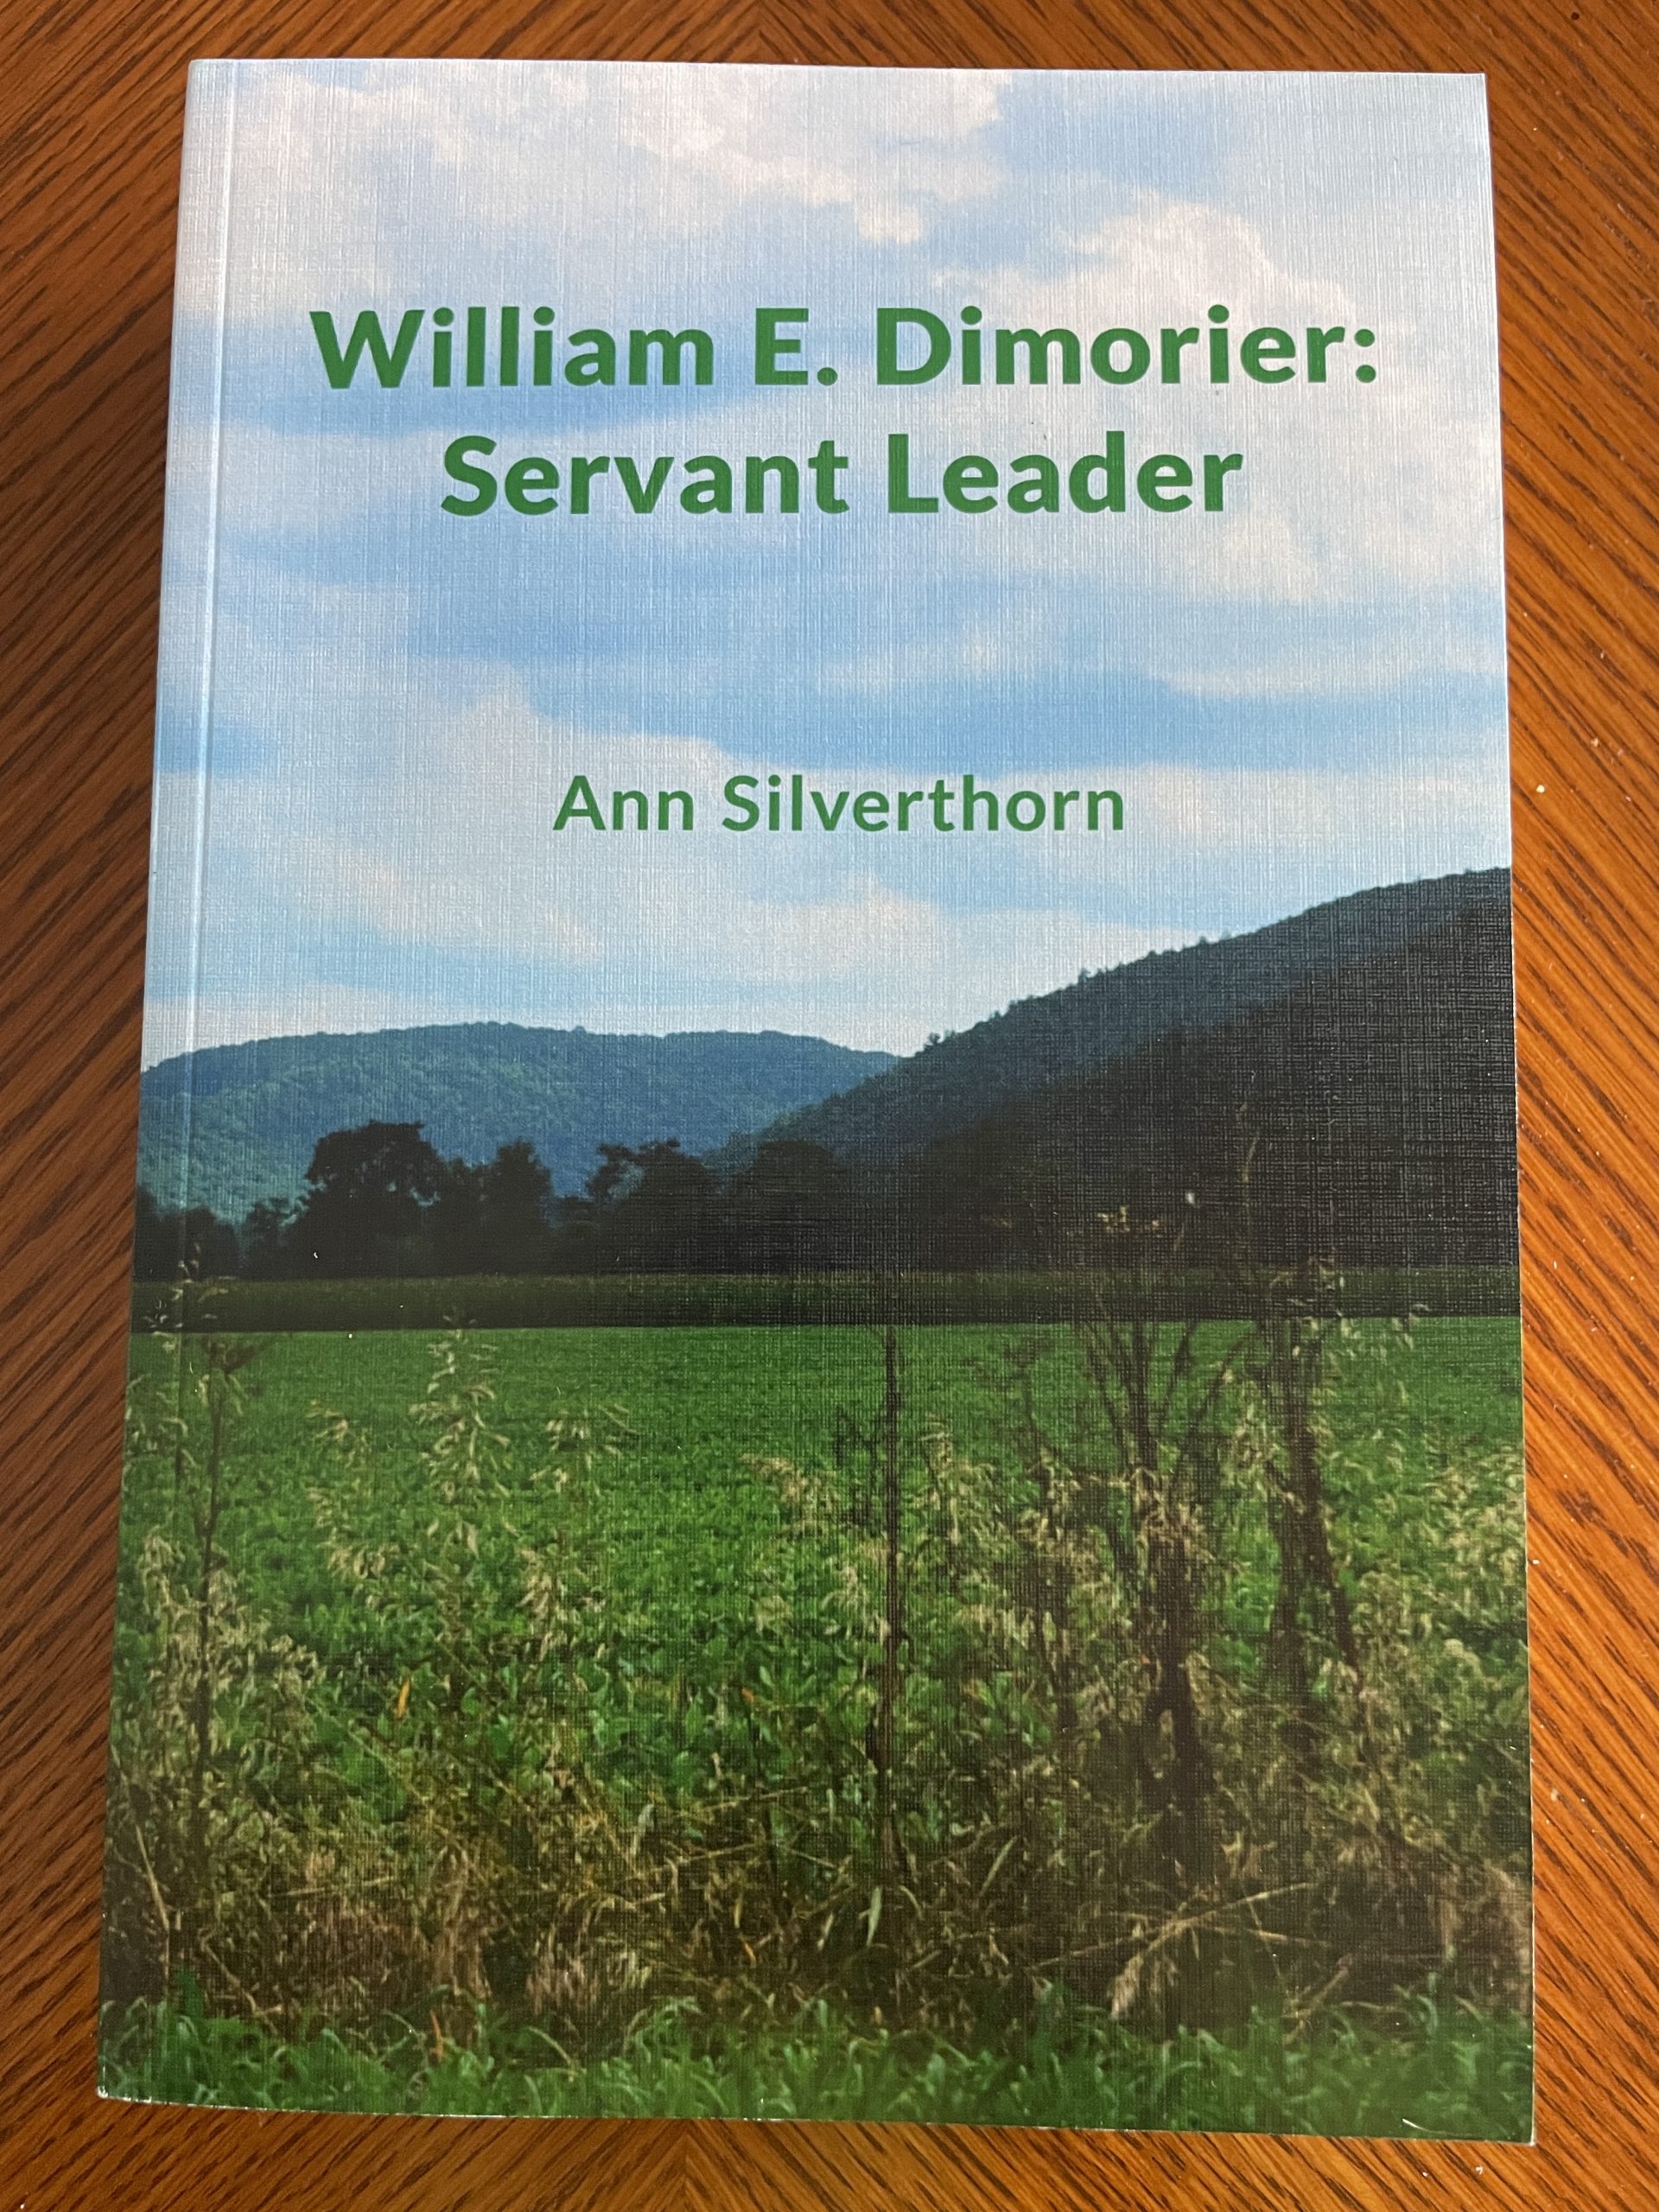 My Self-Publishing Journey—William E. Dimorier: Servant Leader